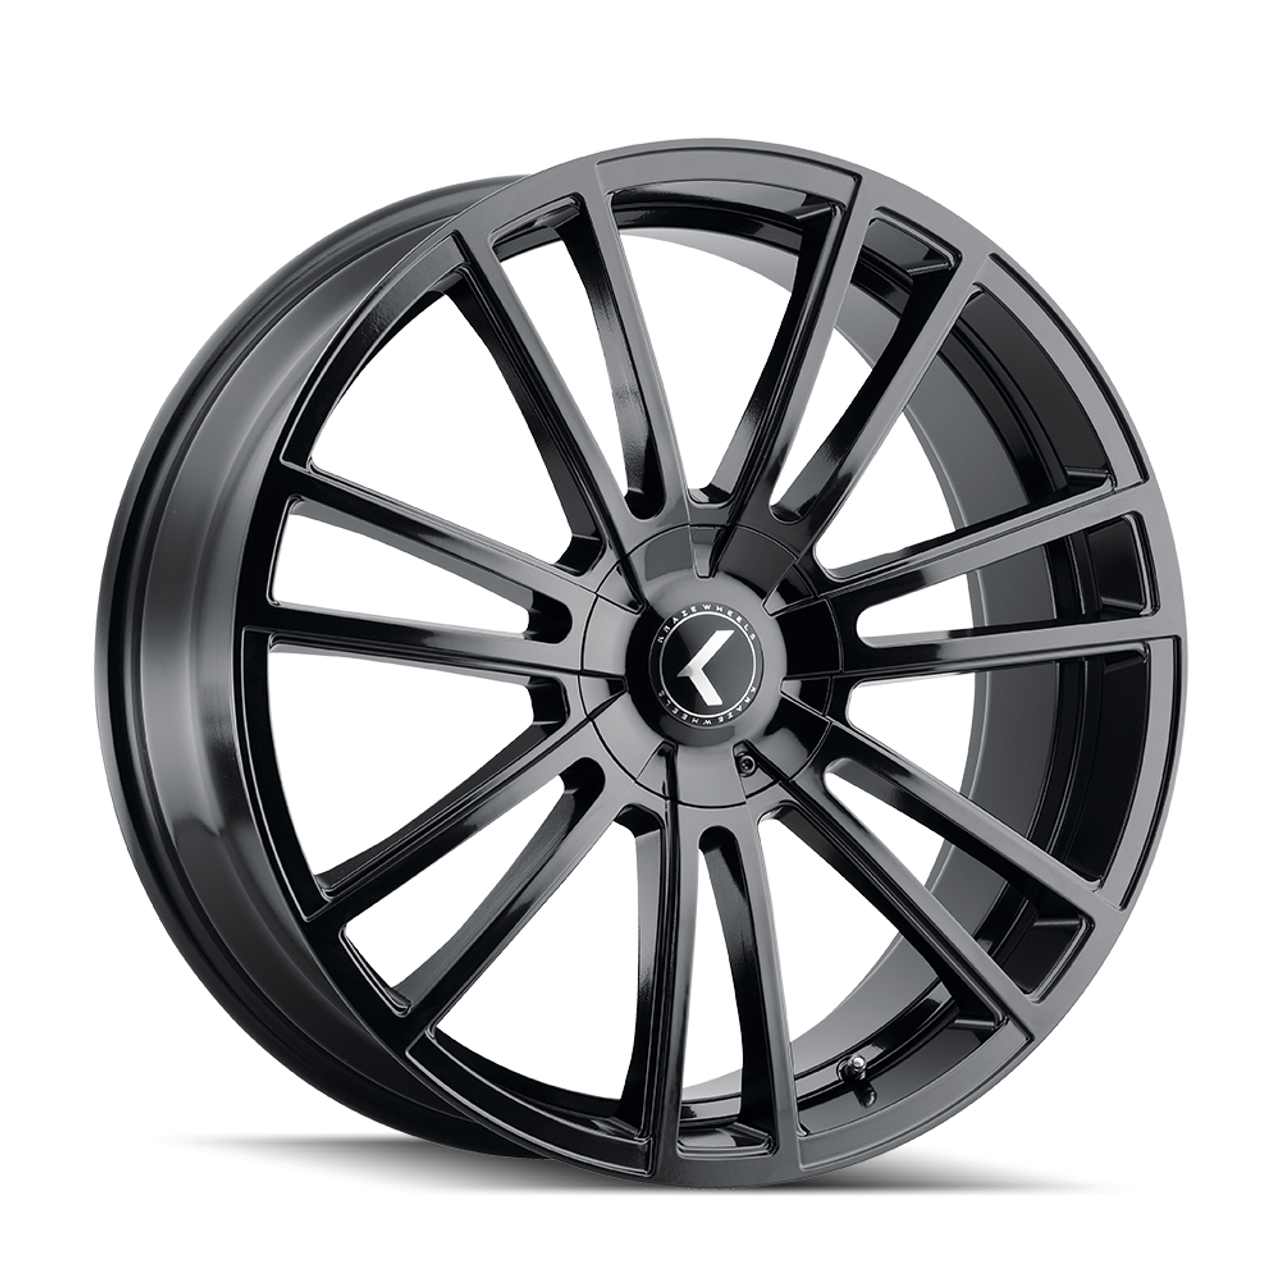 18" Kraze Spectra 18x8 Gloss Black 5x4.25 5x4.5 Wheel 40mm Performance Rim